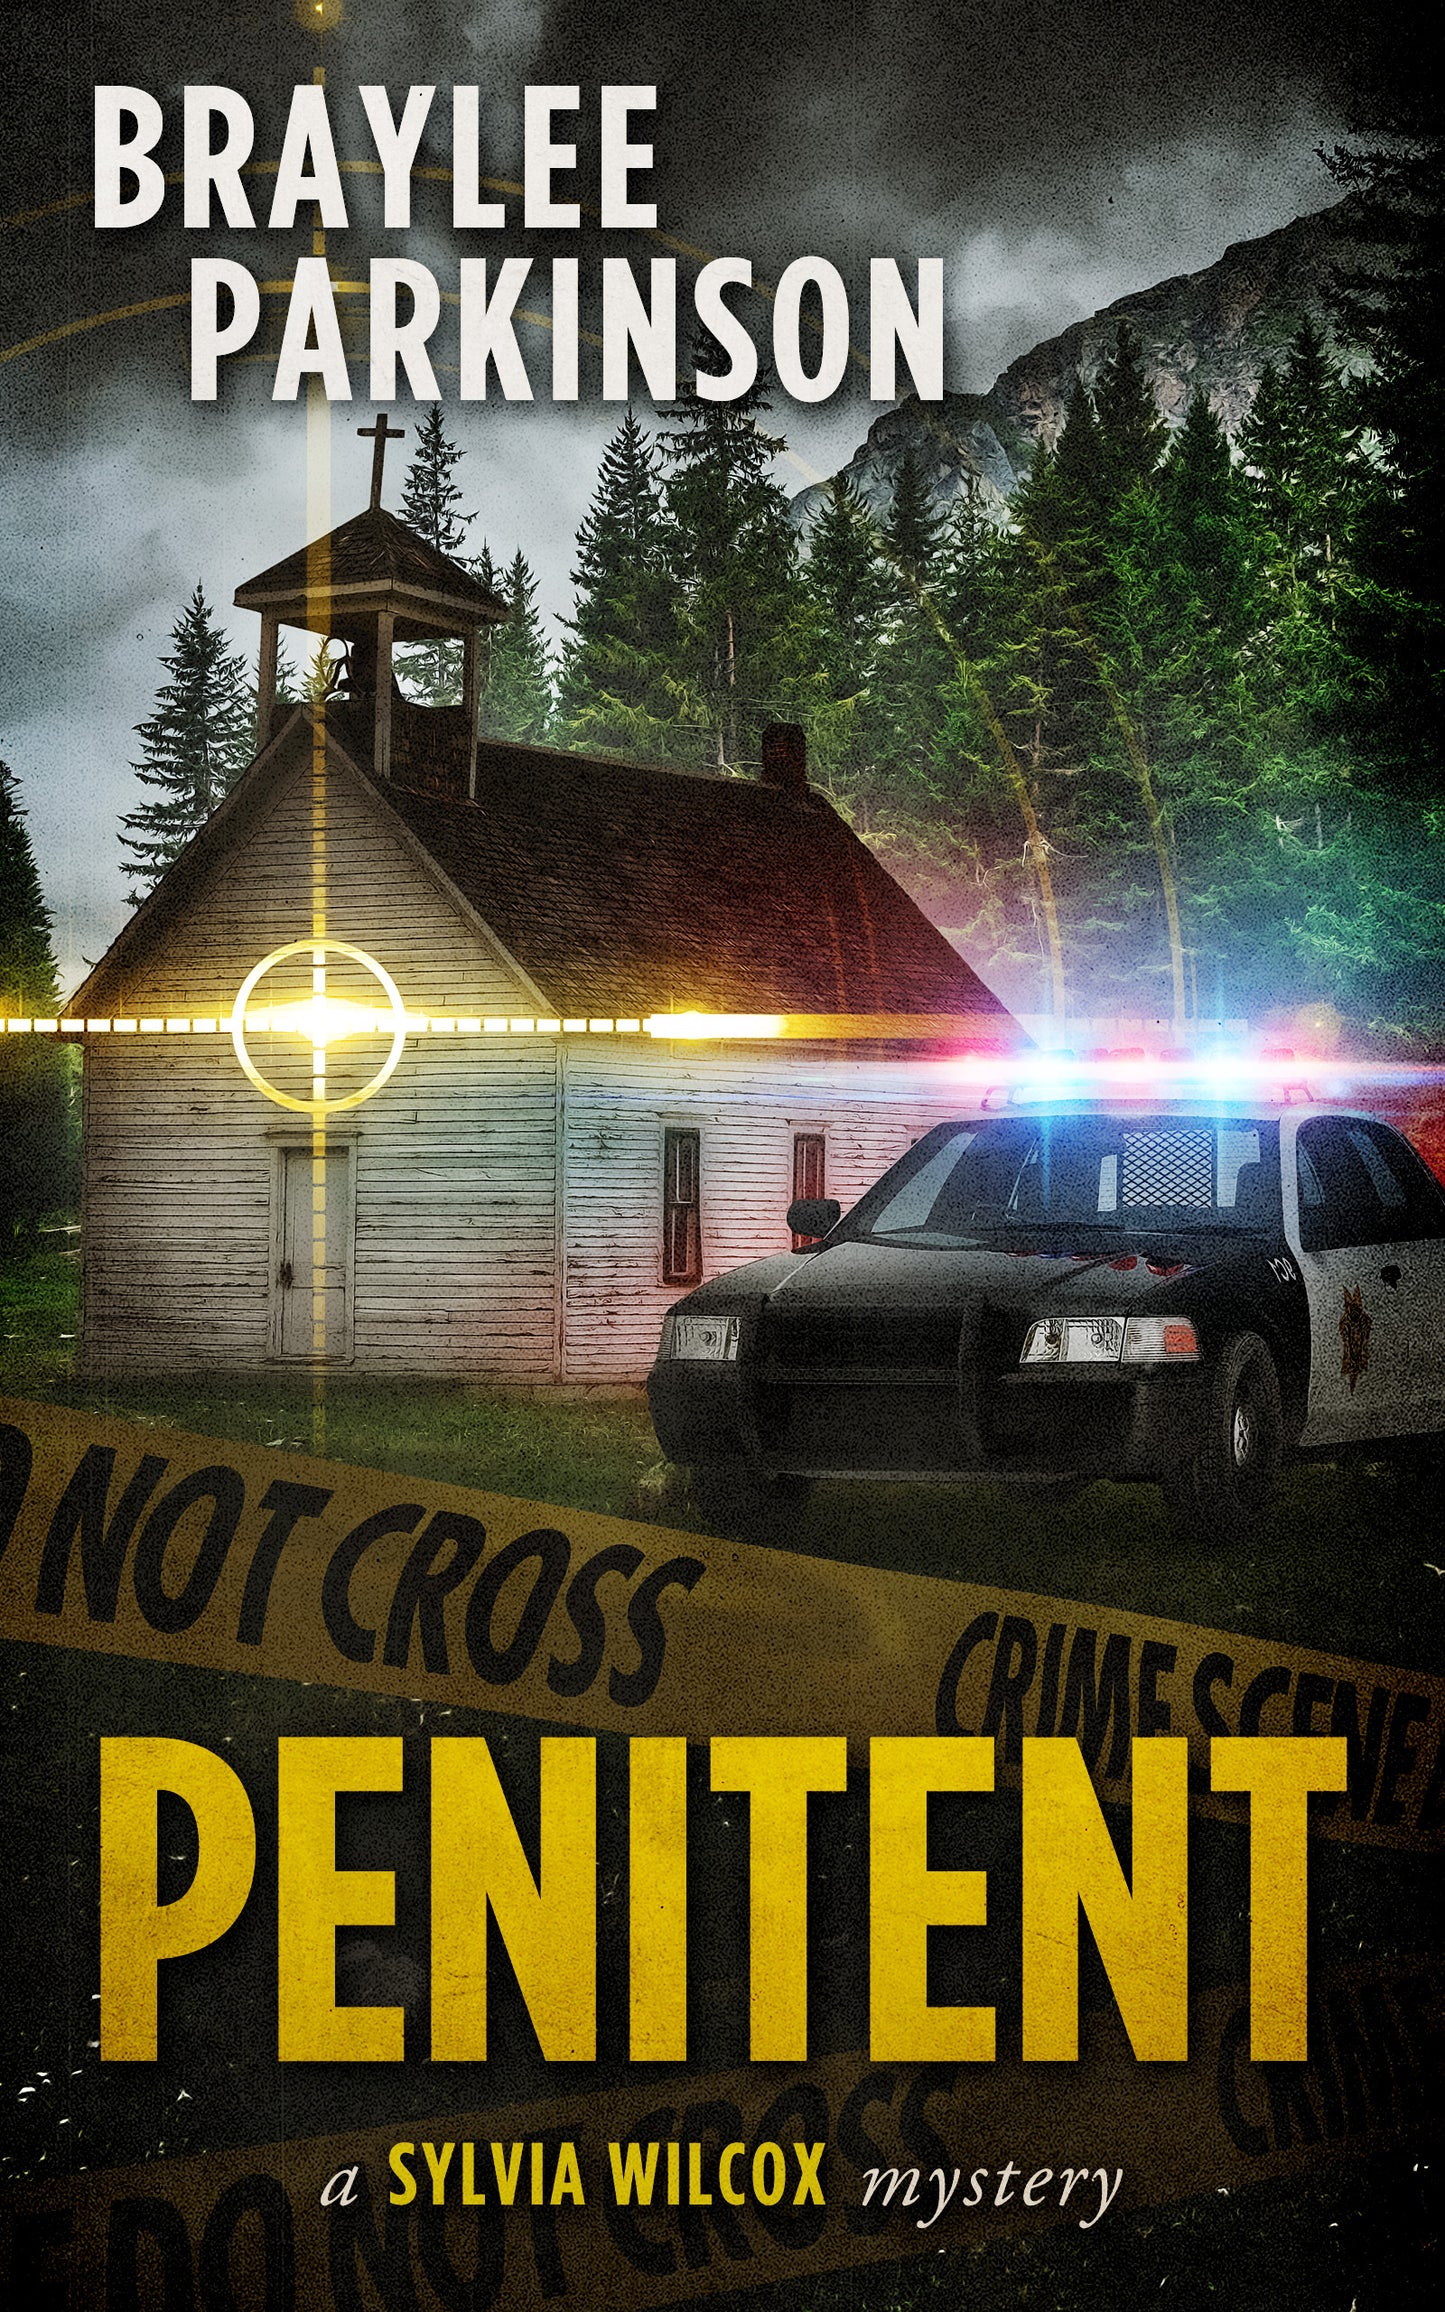 Penitent: A Sylvia Wilcox Mystery